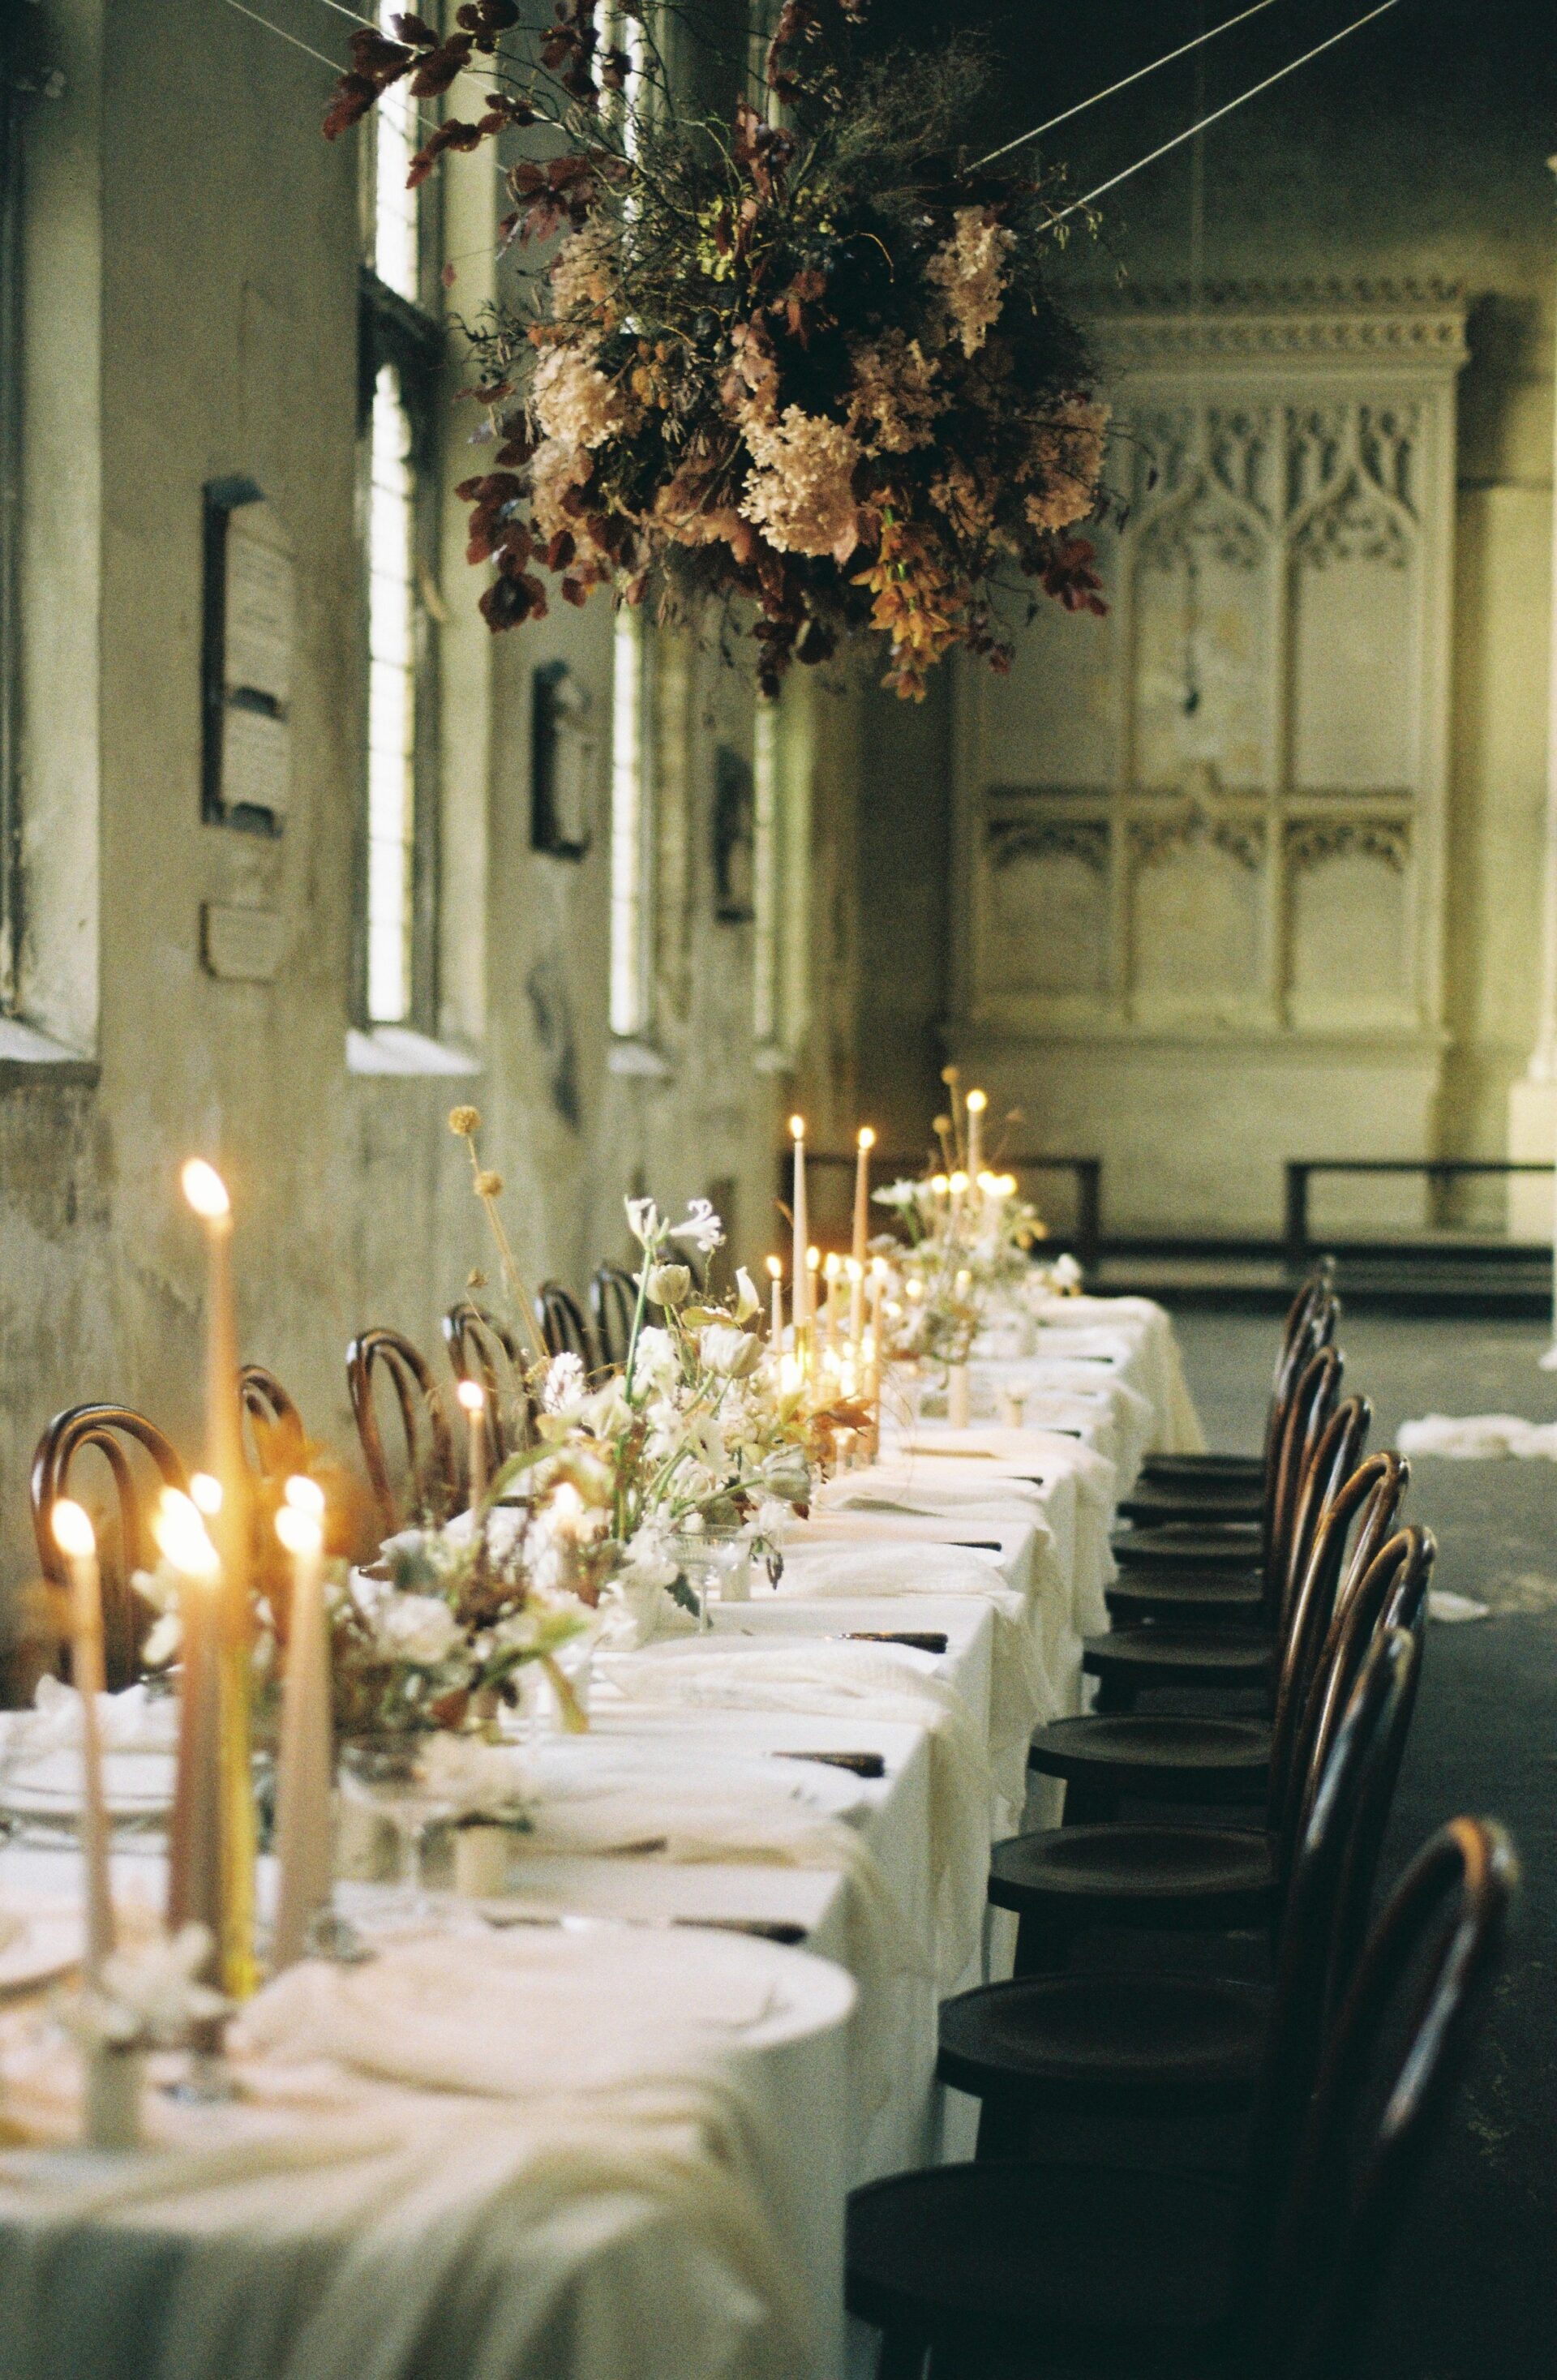 35mm film wedding photography captures luxury wedding tablescape